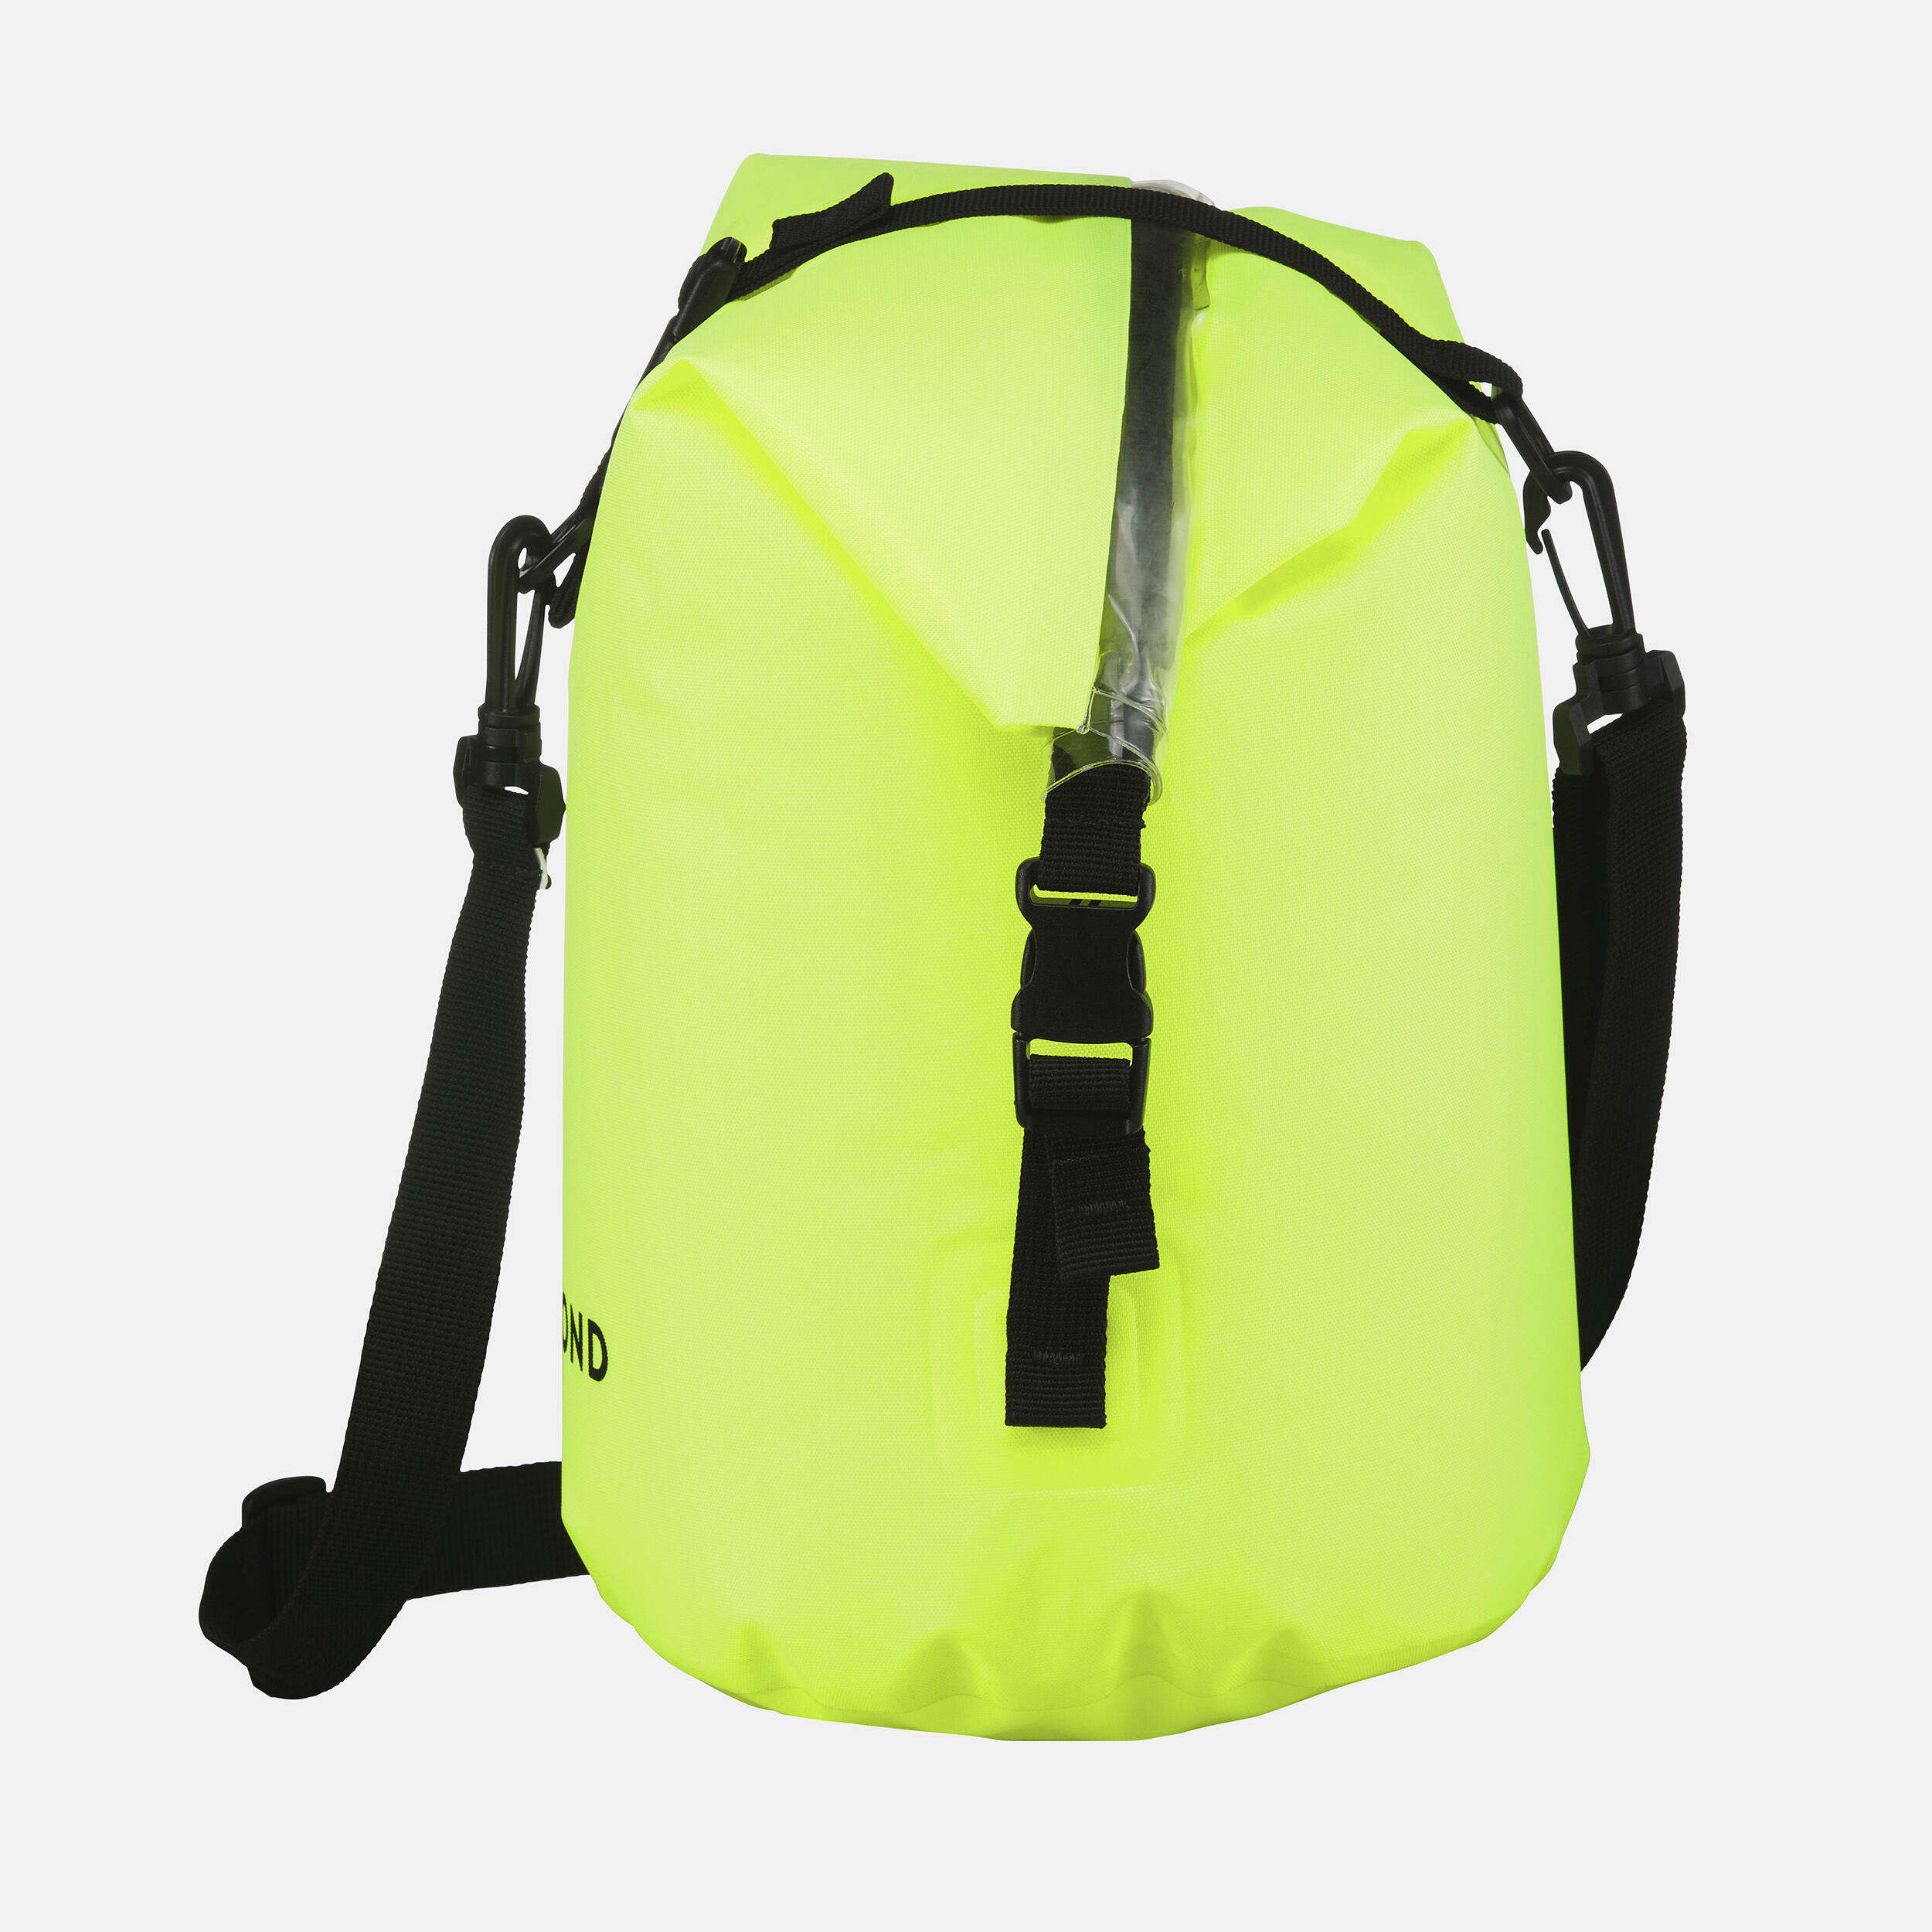 Waterproof canyoning bag 10L IPX7 - MK 10 4/5